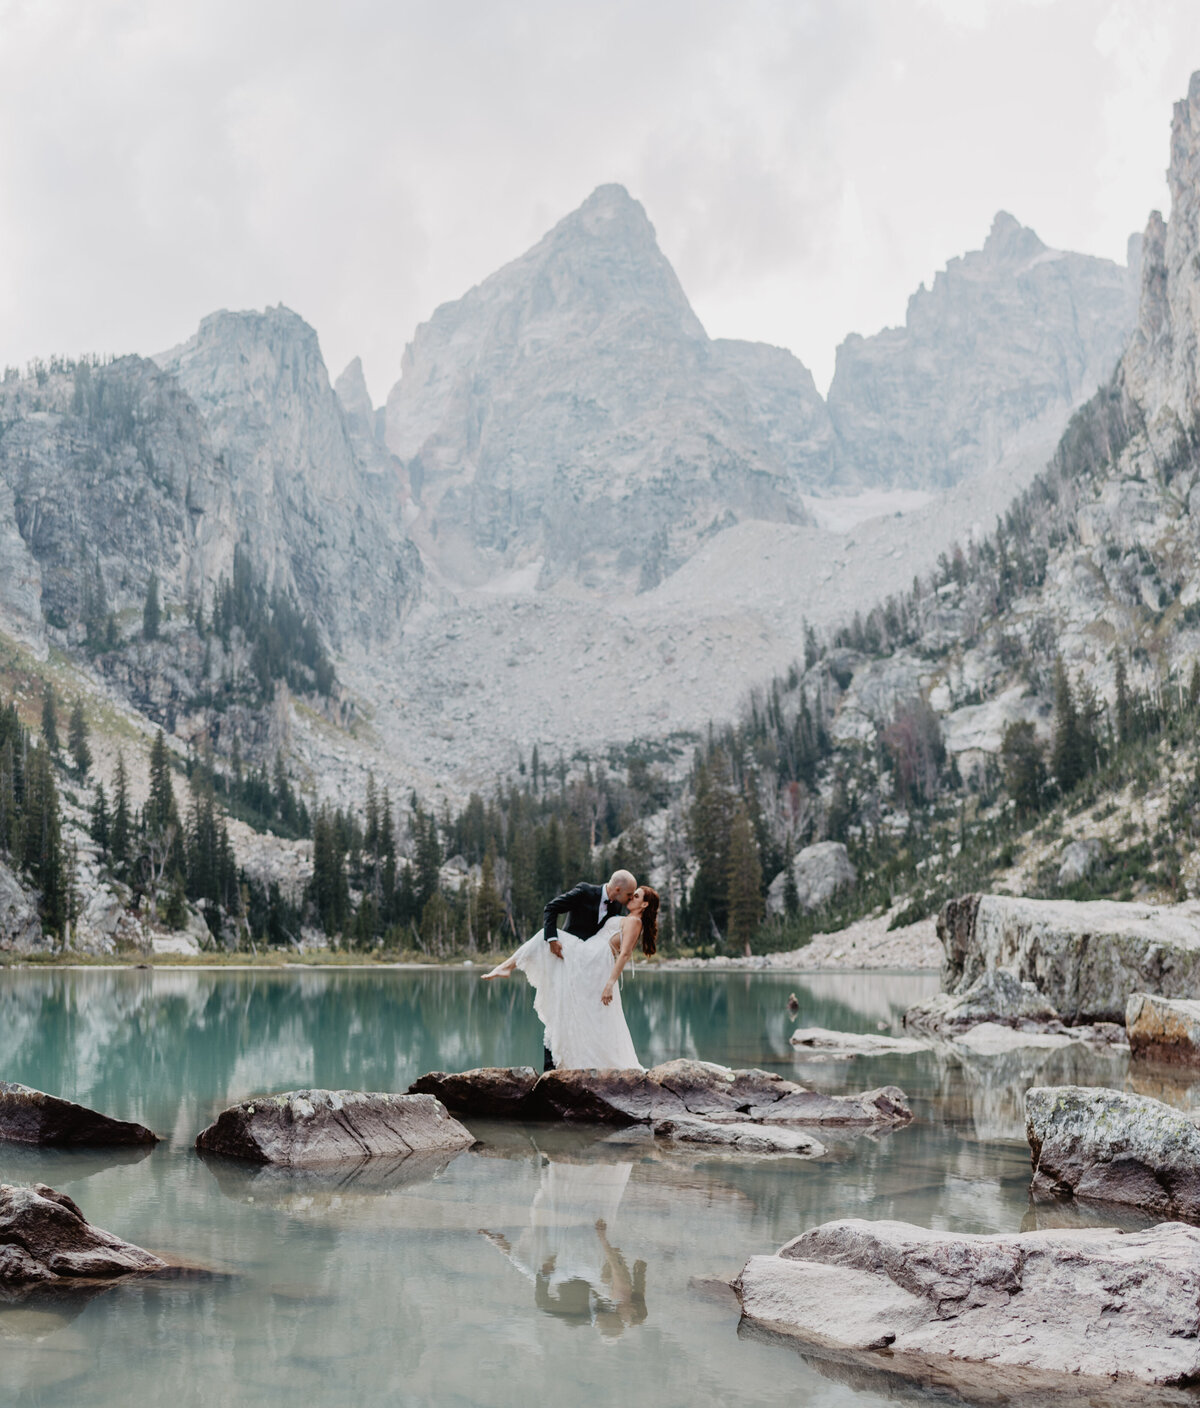 Jackson Hole Photographers capture groom dipping bride